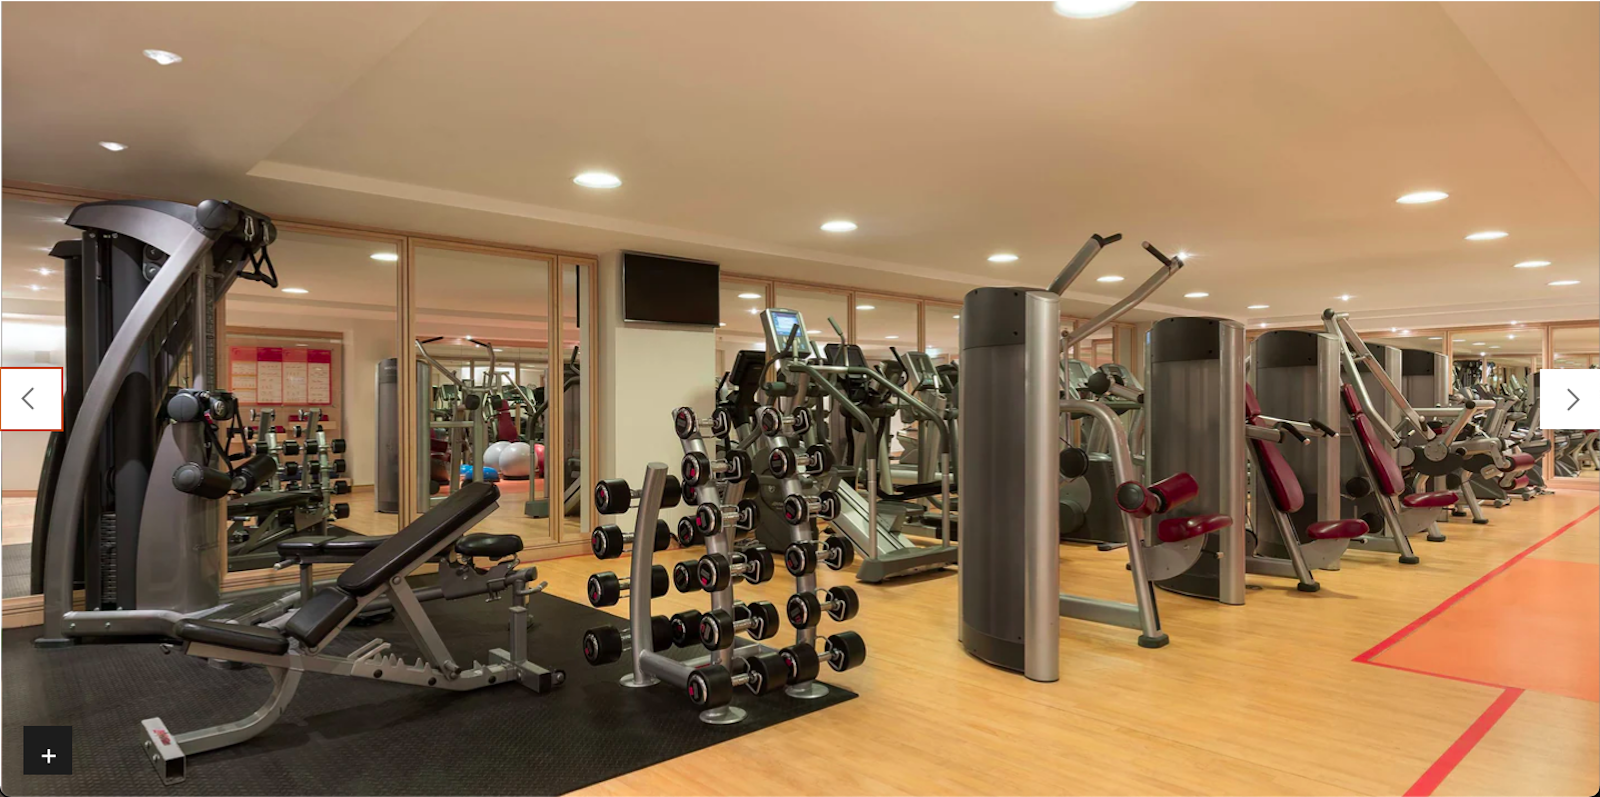 Screenshot of Sheraton Stockholm fitness center, taken from hotel website.